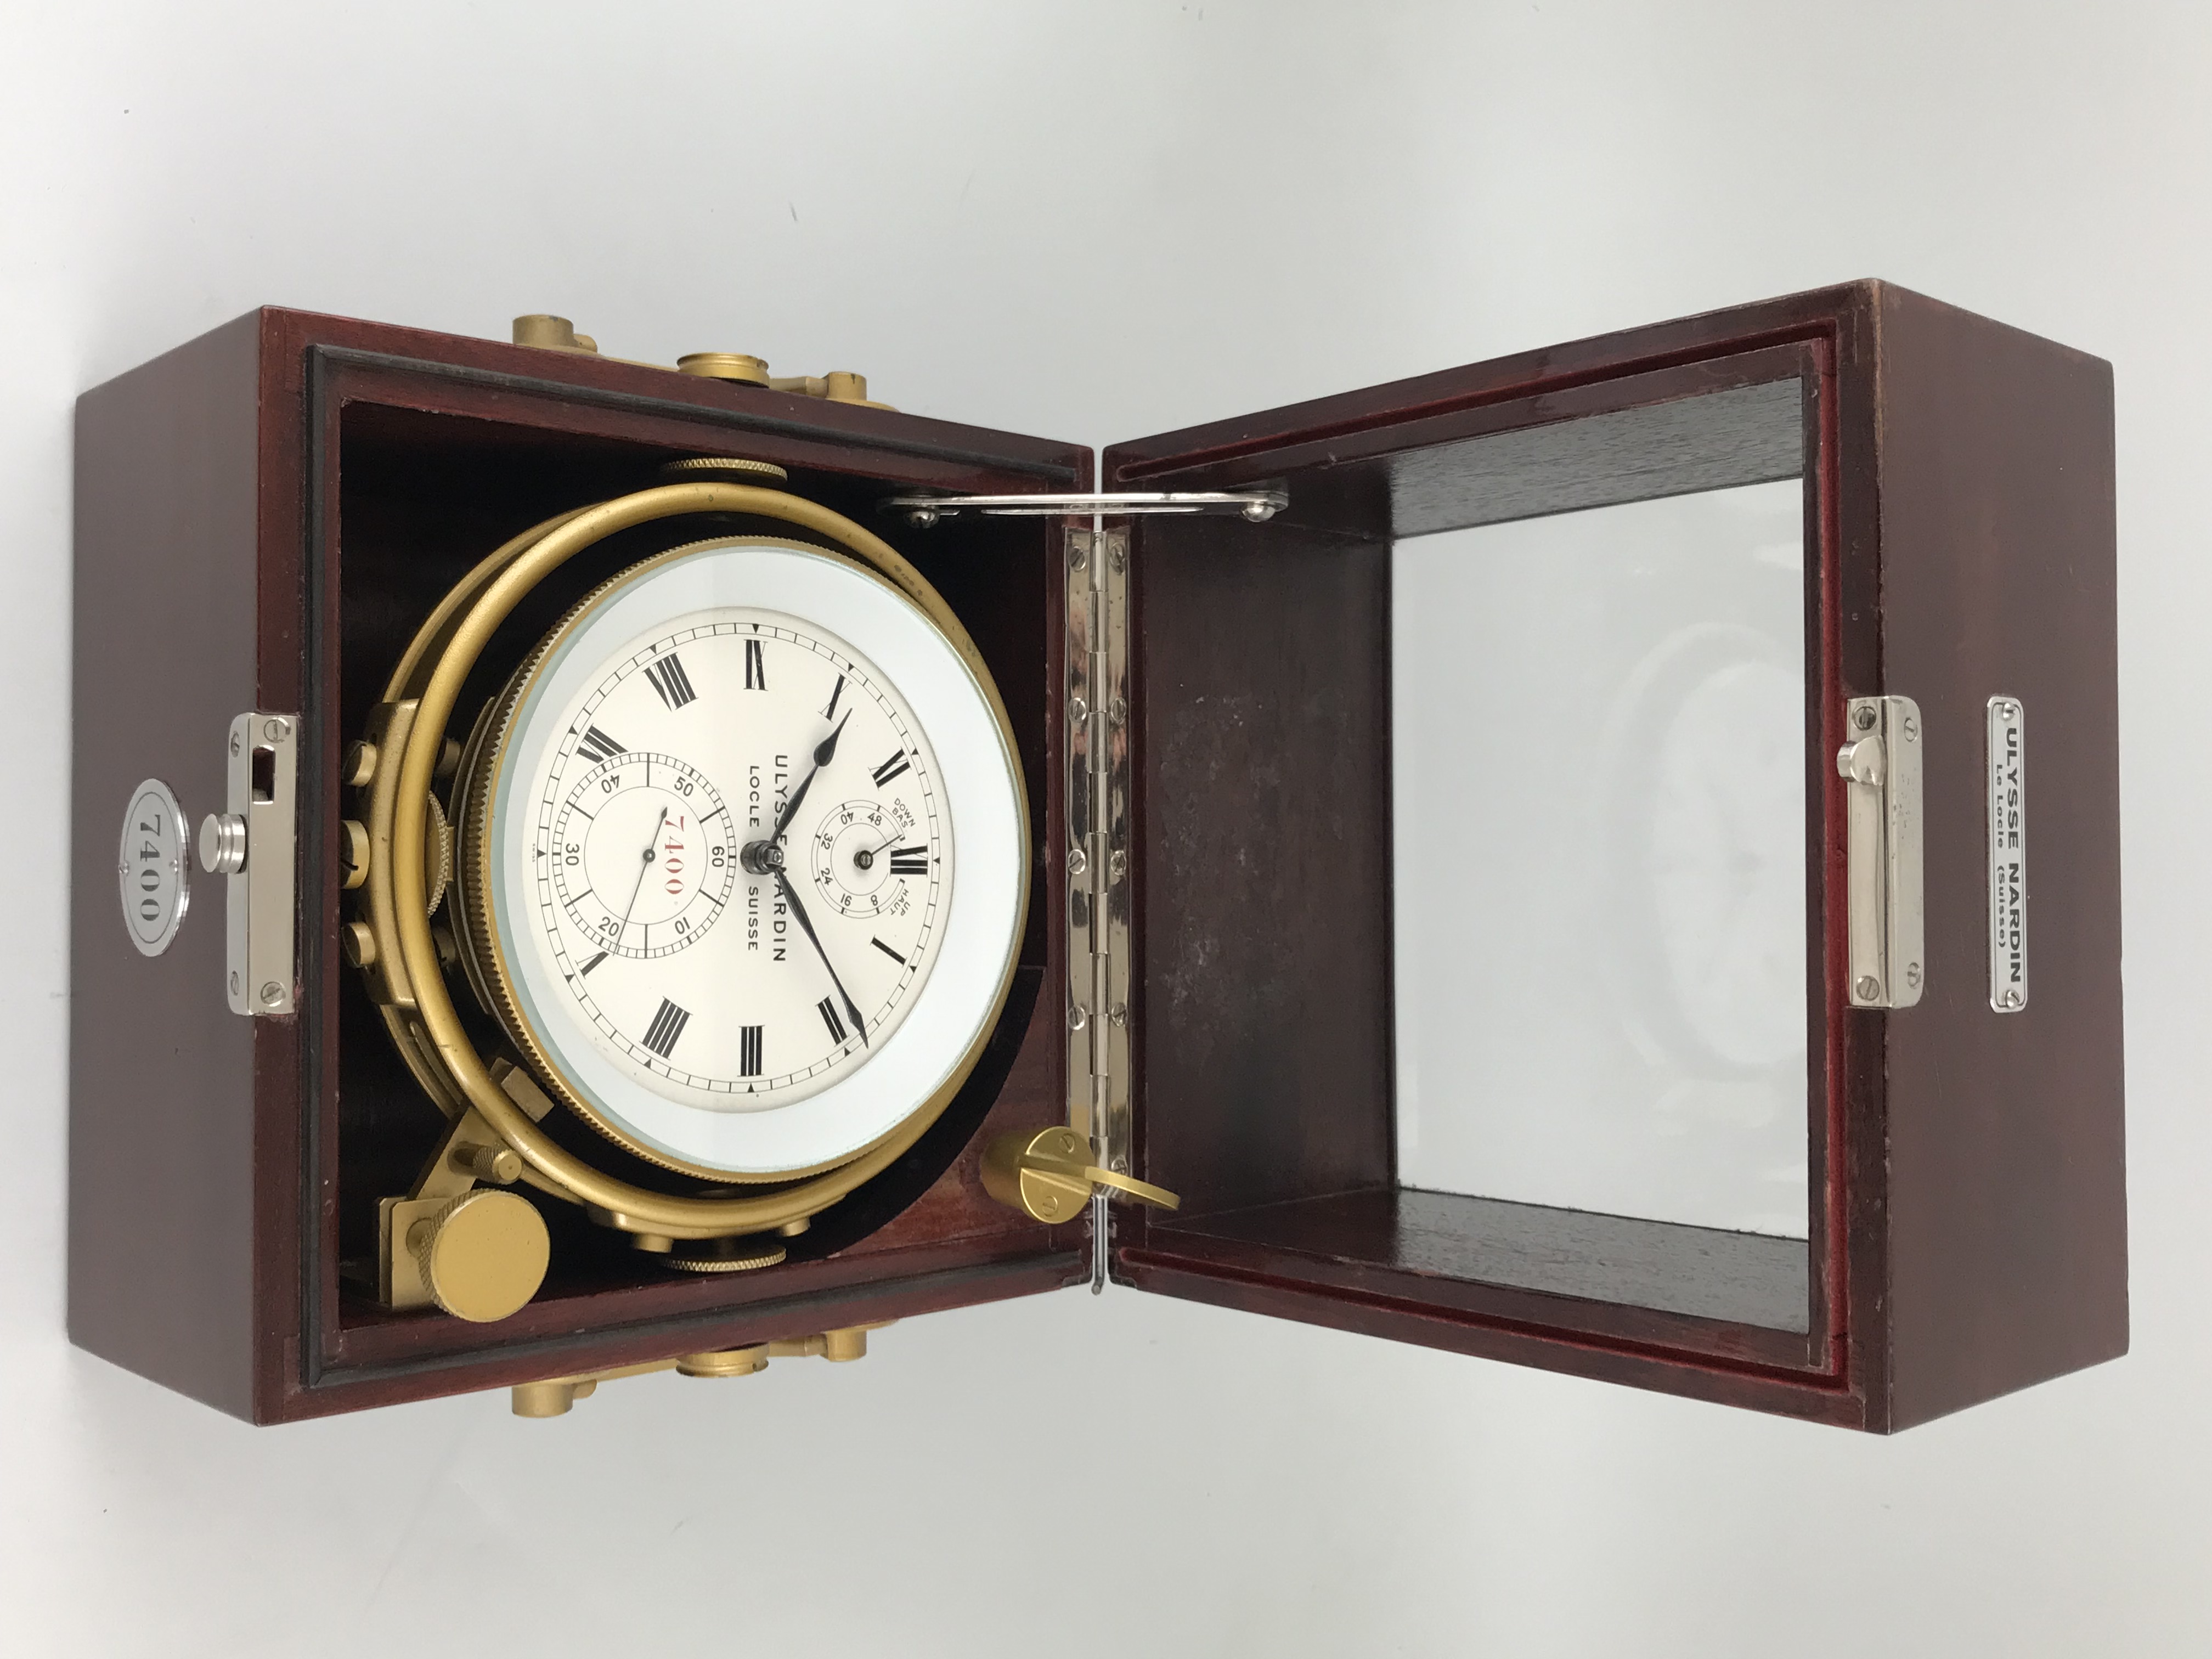 Ulysse Nardin Marine chronometer